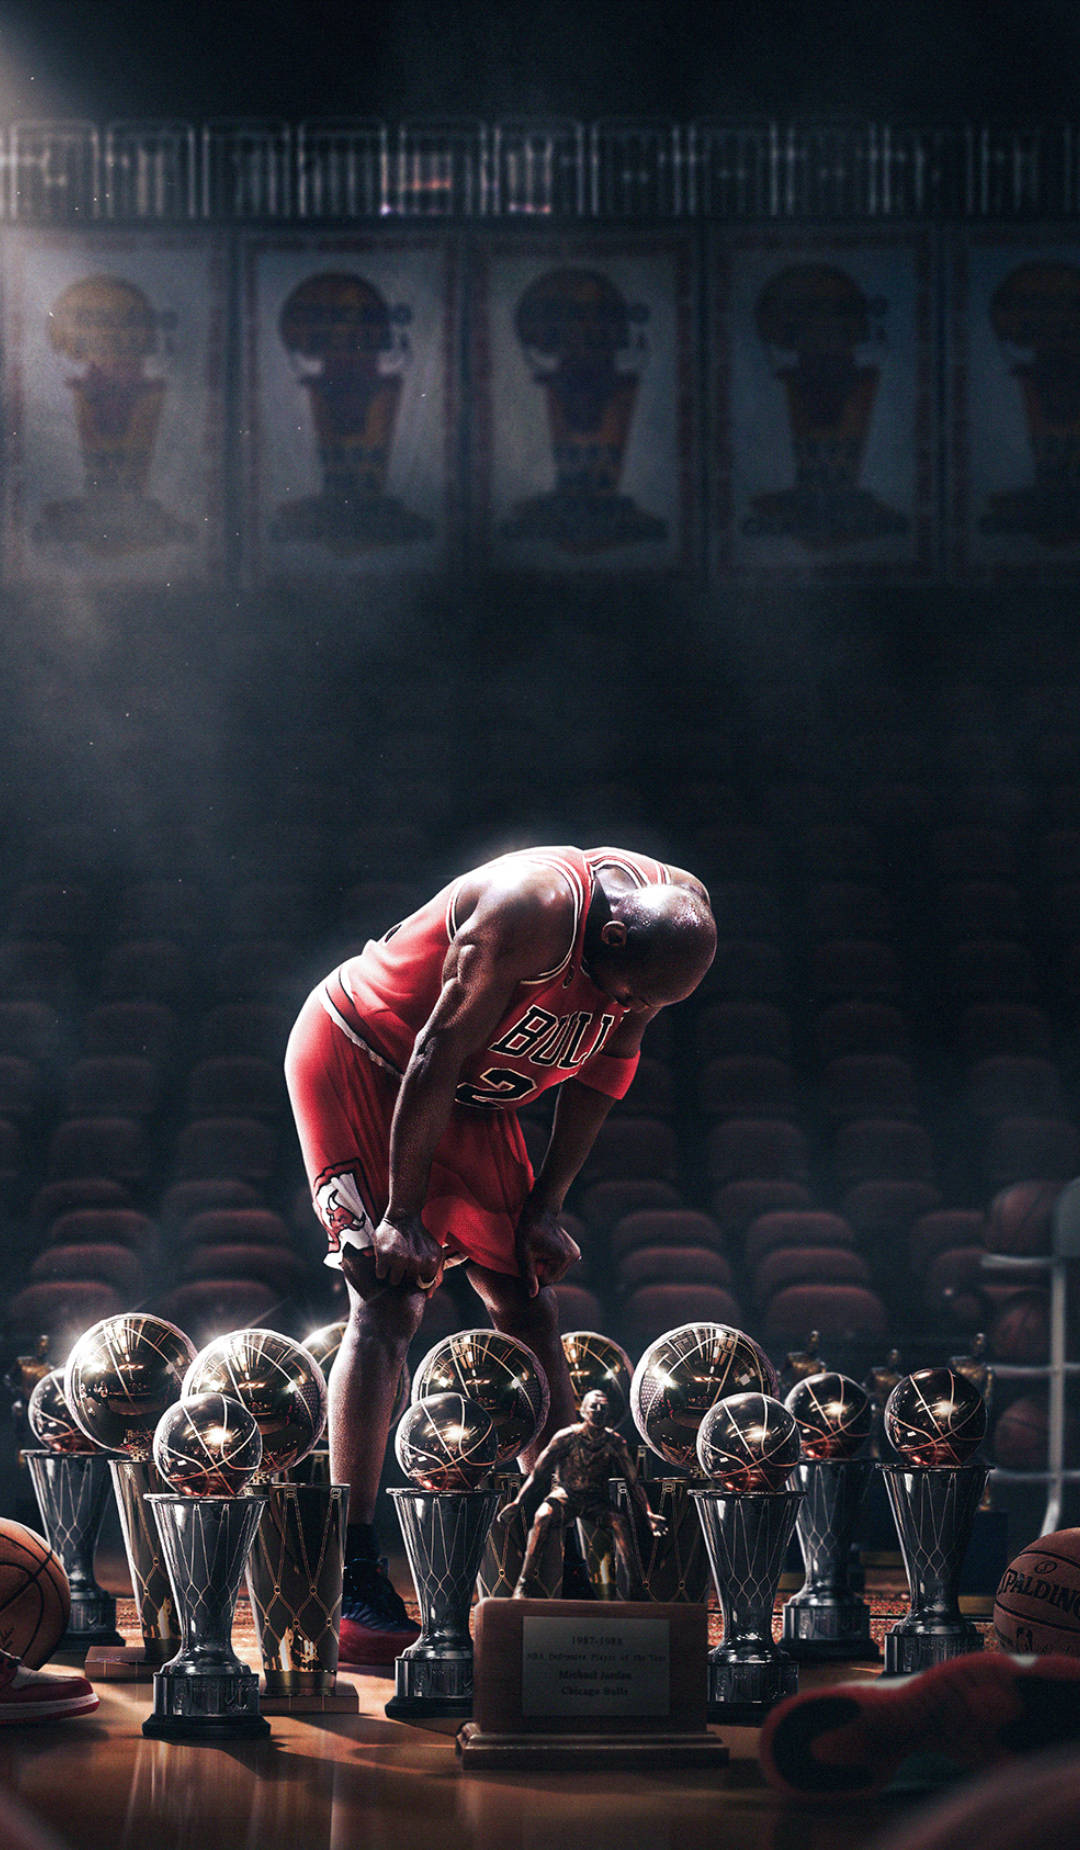 Cool Michael Jordan Trophies In Spotlight Background